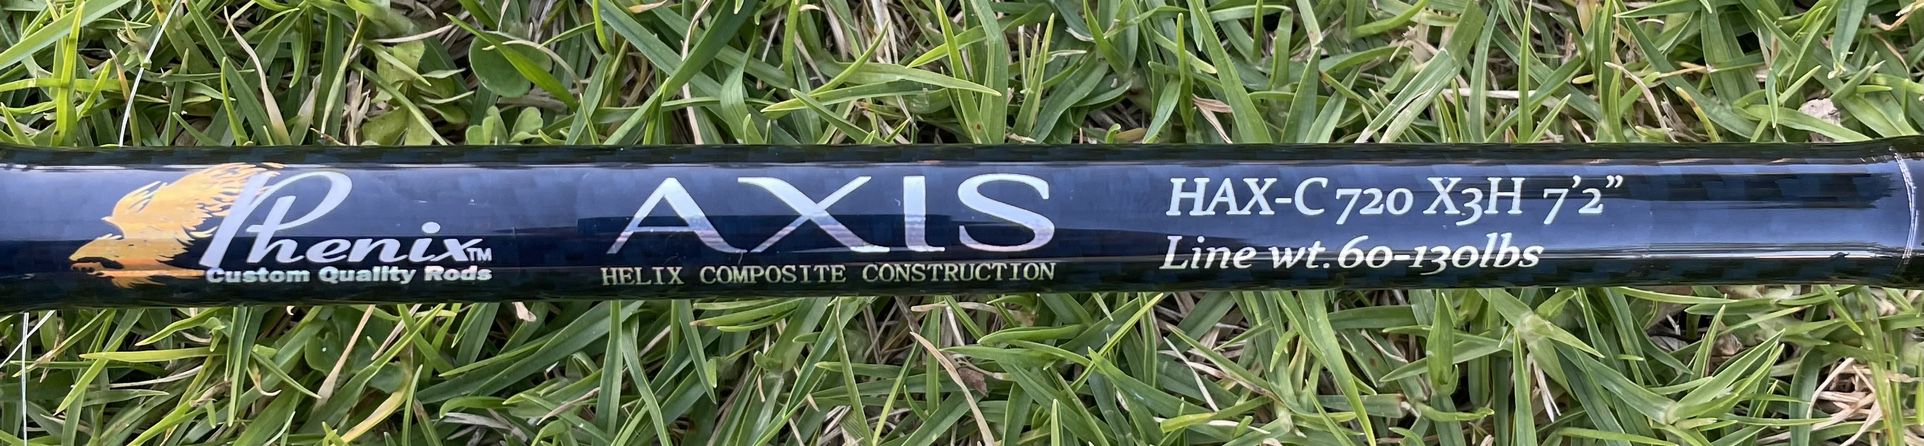 Phenix Axis Rail Rod Fishing Rod Brand New